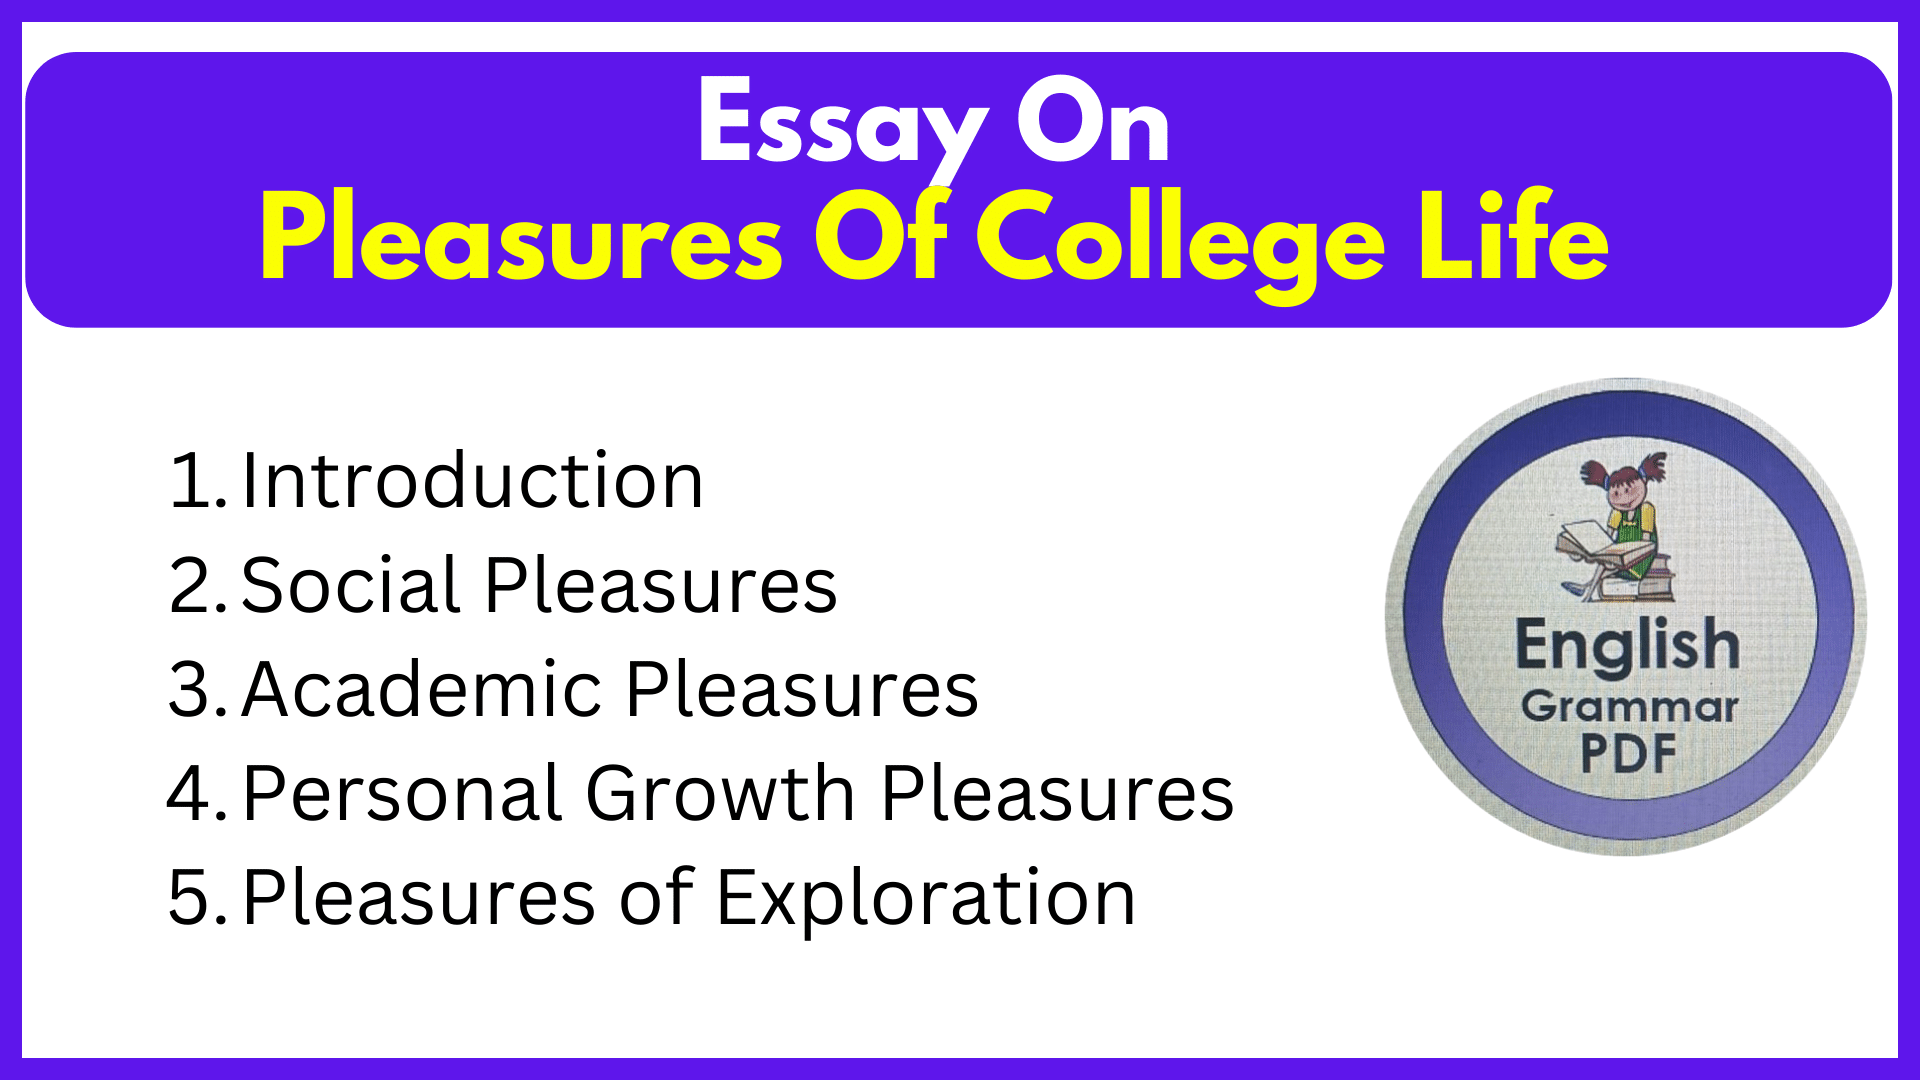 Essay On Pleasures Of College Life